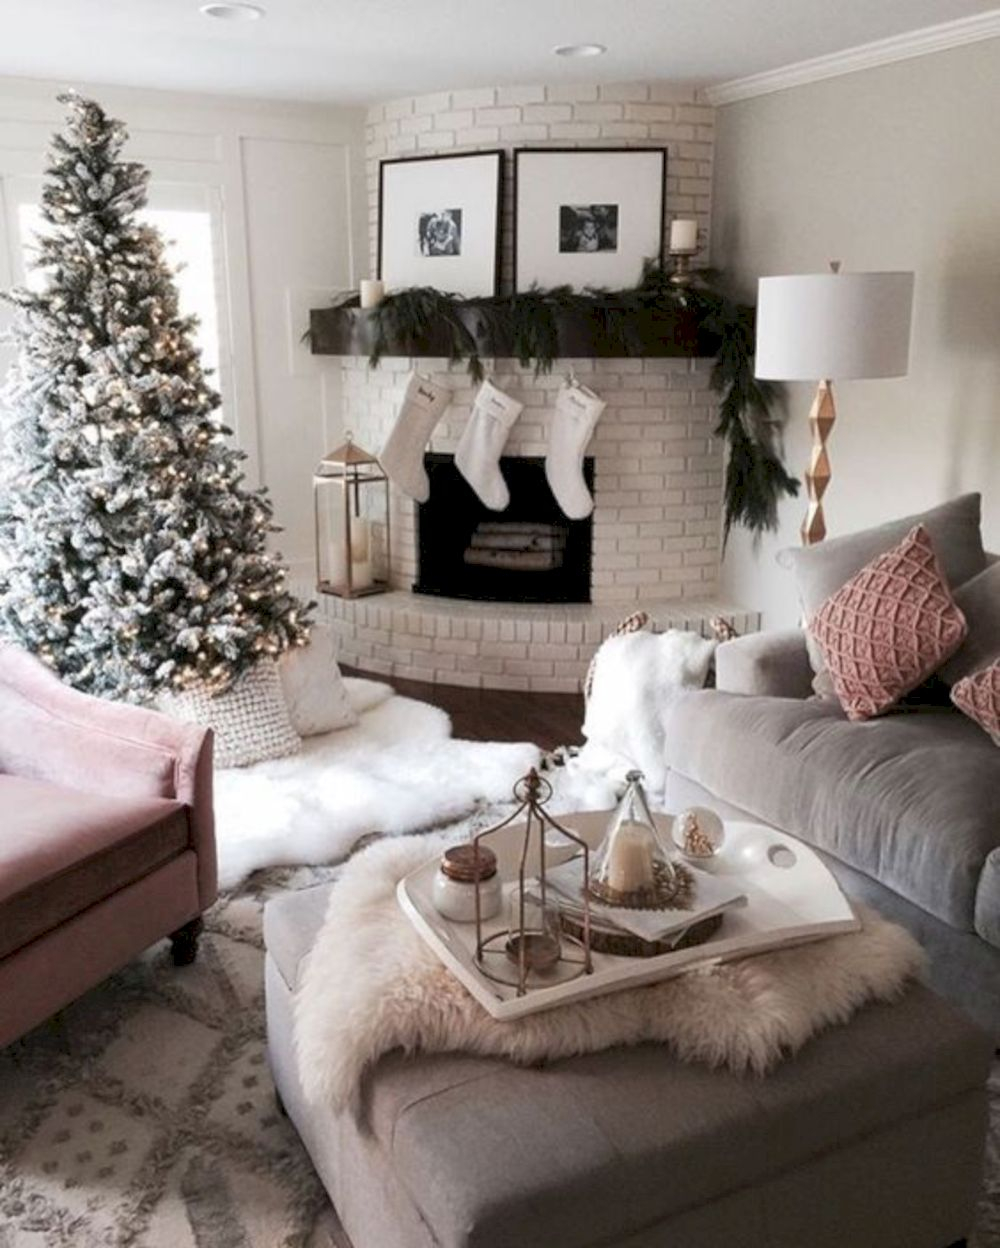 room decor christmas living festive bringing atmosphere tips source